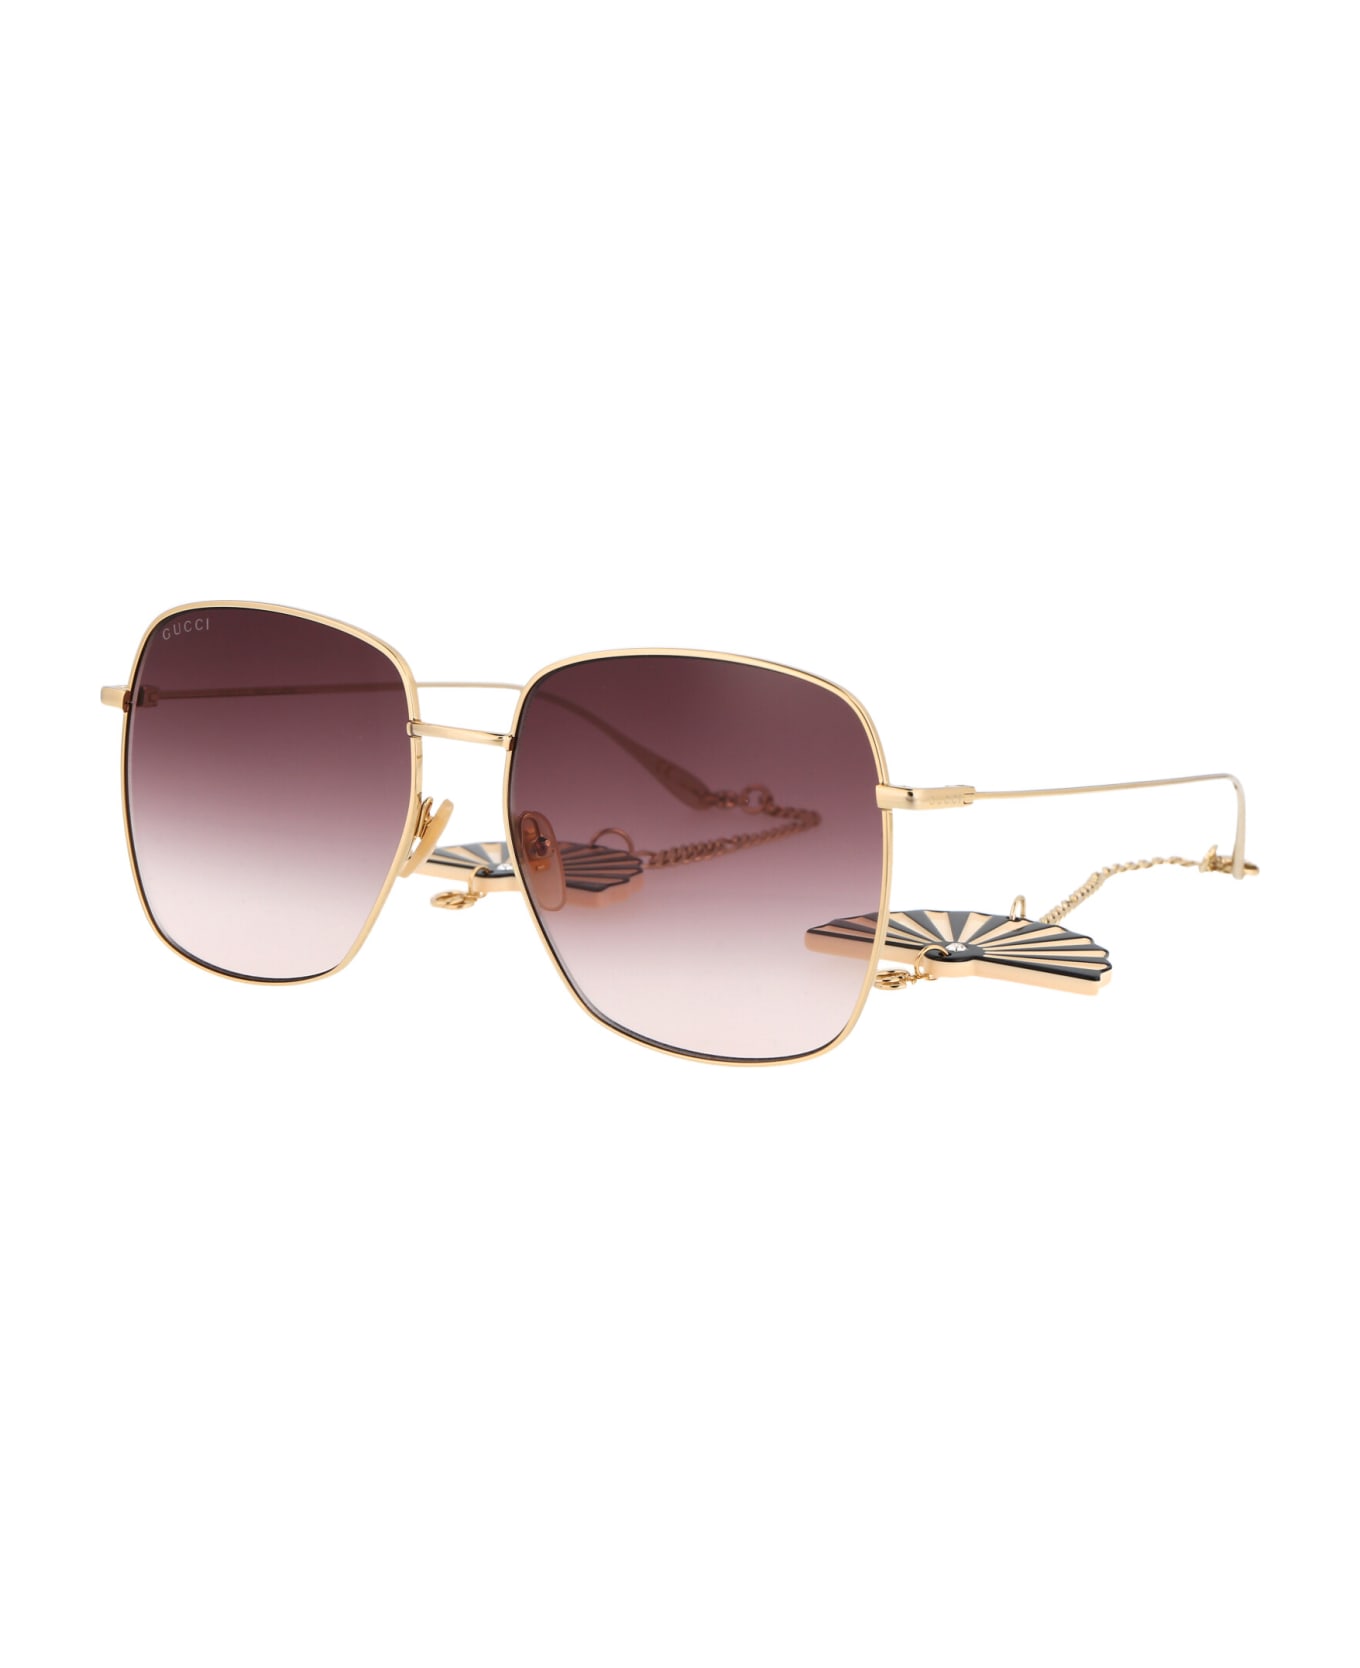 Gucci Eyewear Gg1031s Sunglasses - 010 GOLD GOLD RED サングラス